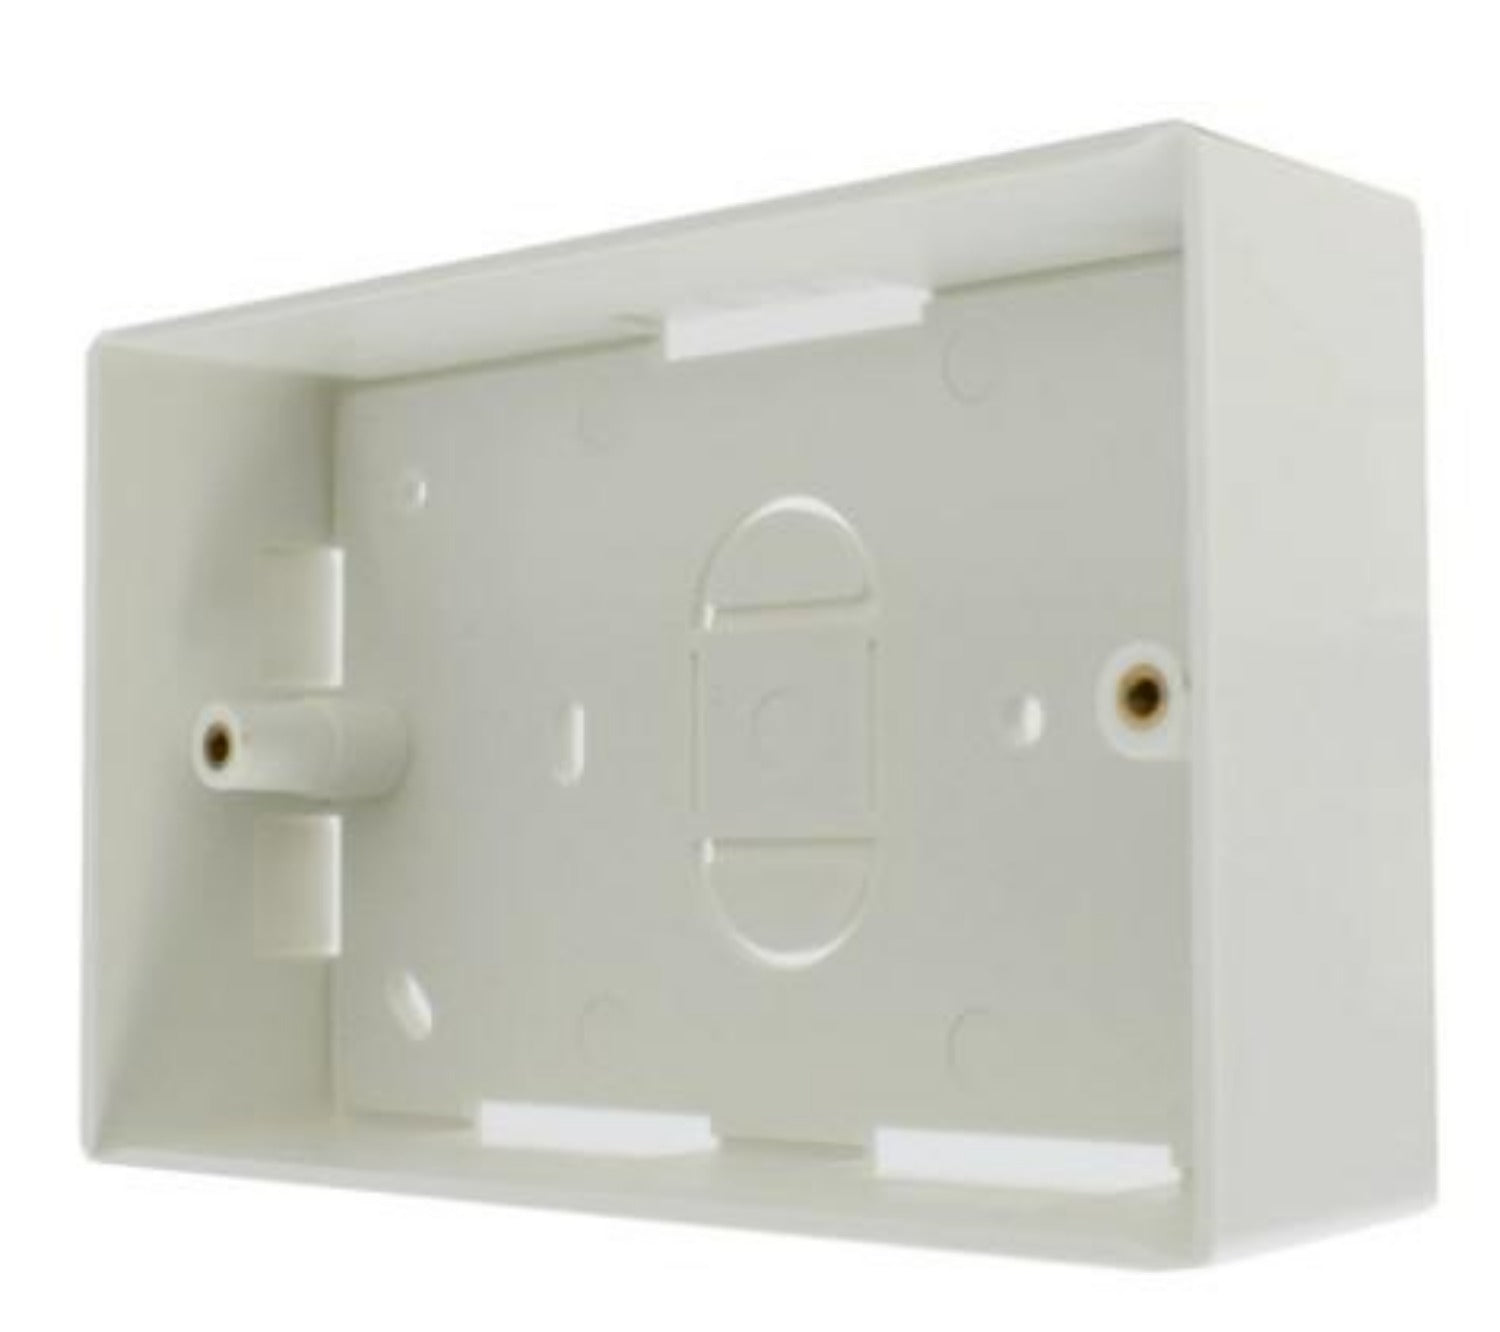 White surface mount box